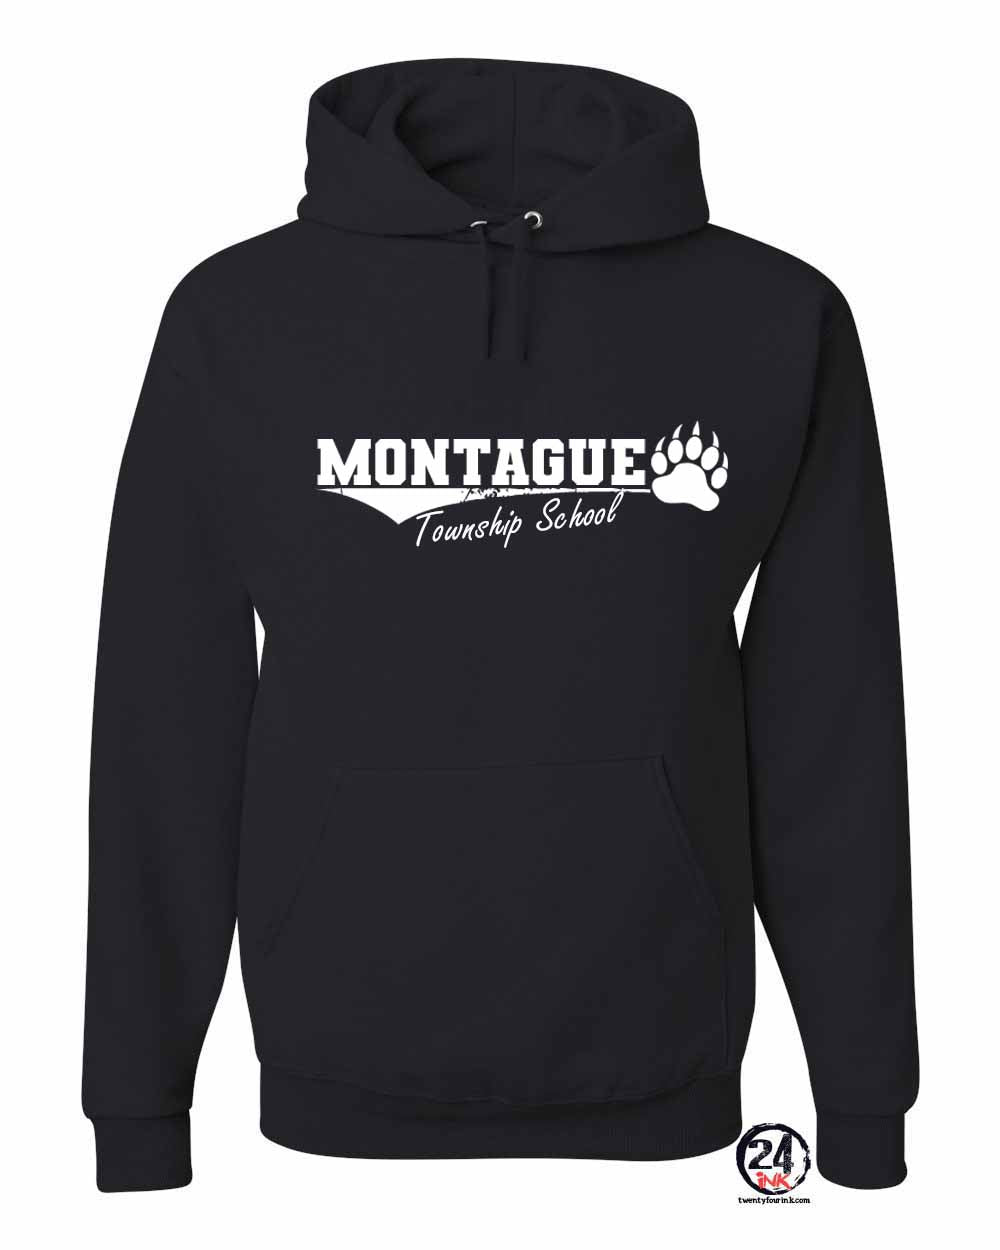 Montague Design 1 Hooded Sweatshirt